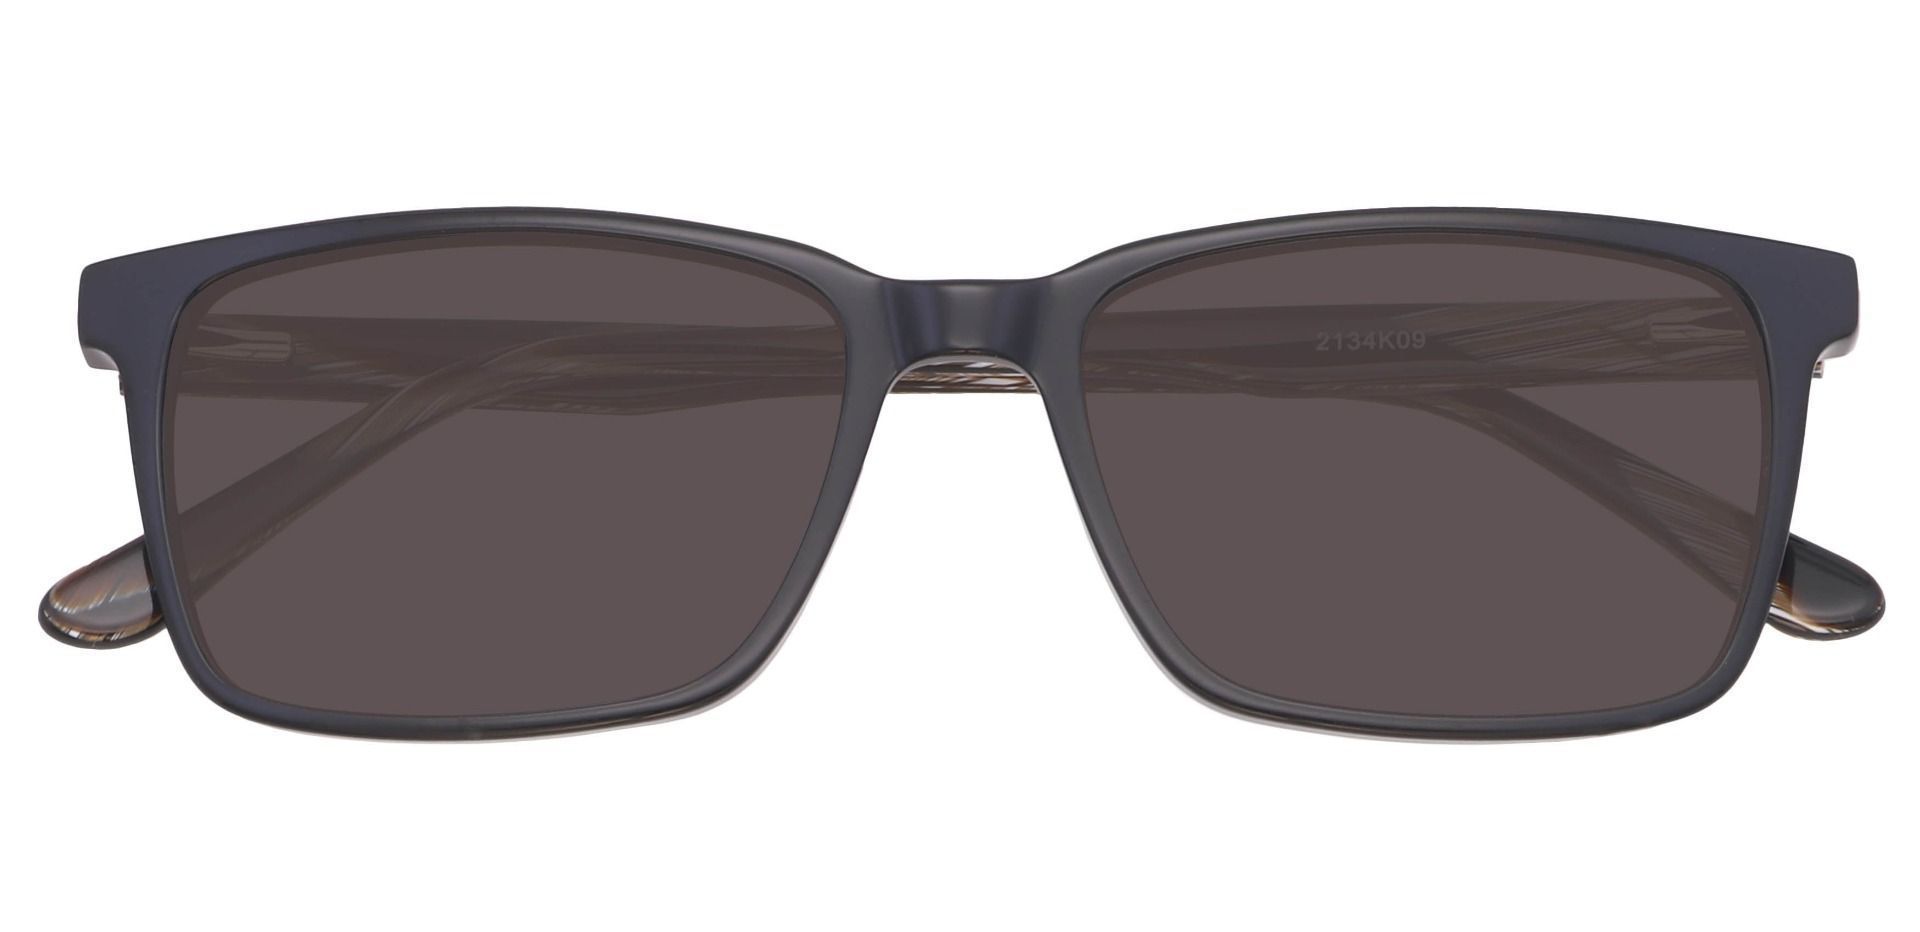 Venice Rectangle Progressive Sunglasses - Black Frame With Gray Lenses